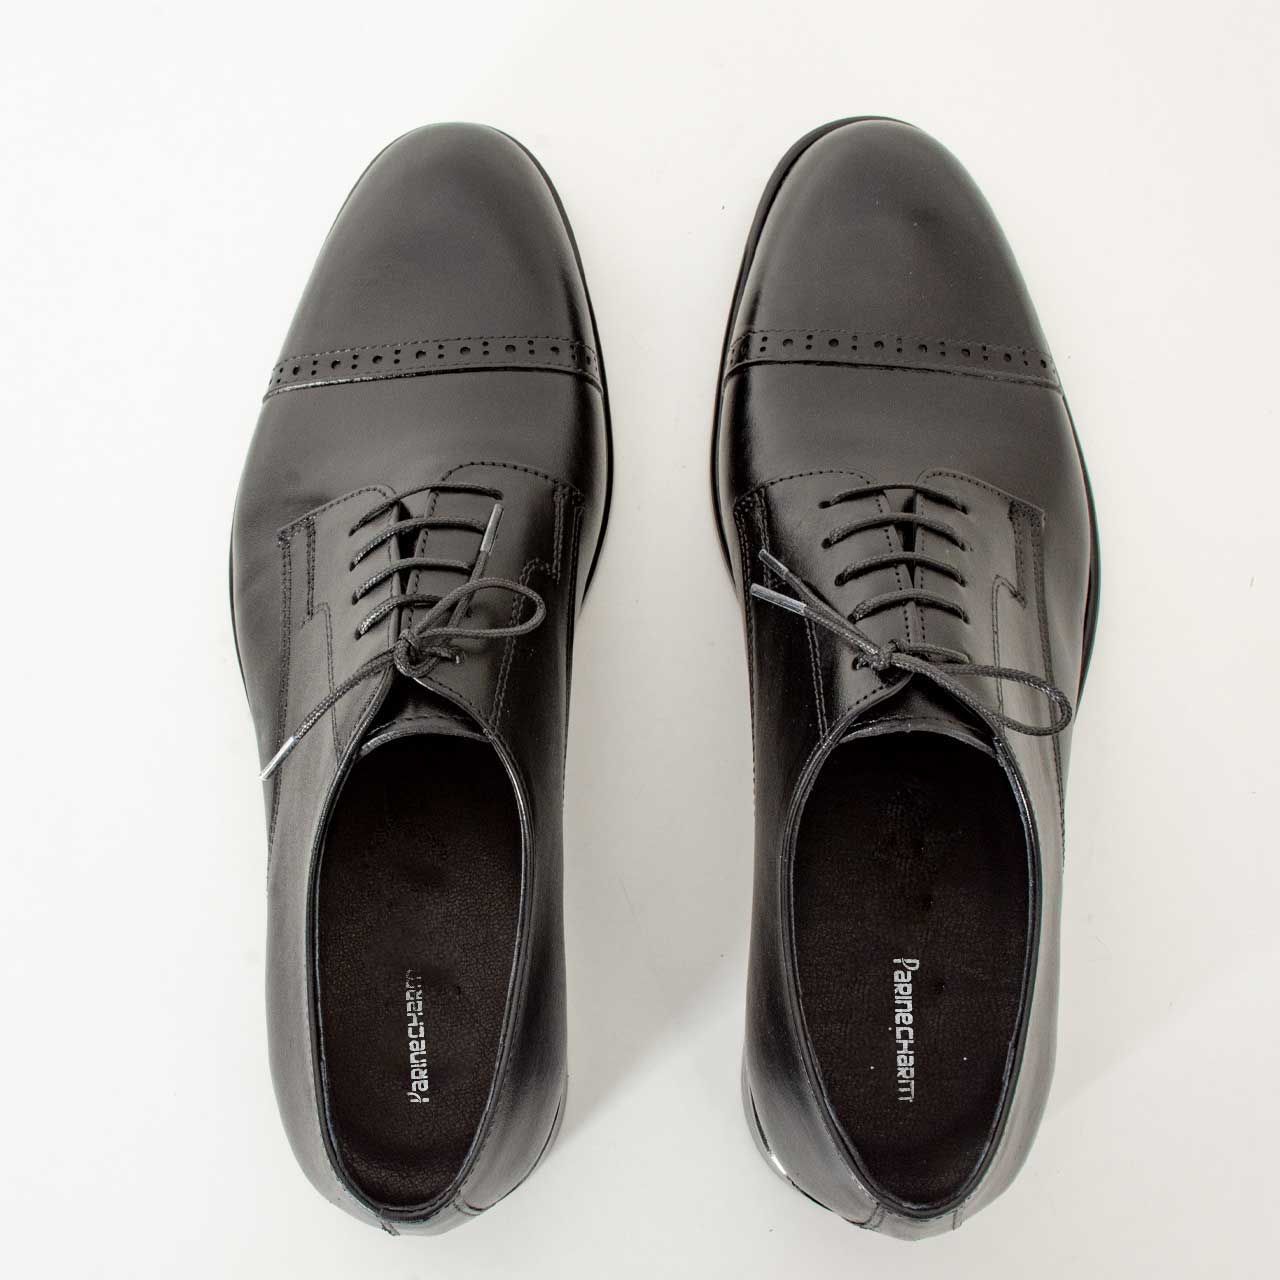 کفش مردانه پارینه چرم مدل sho233 -  - 5